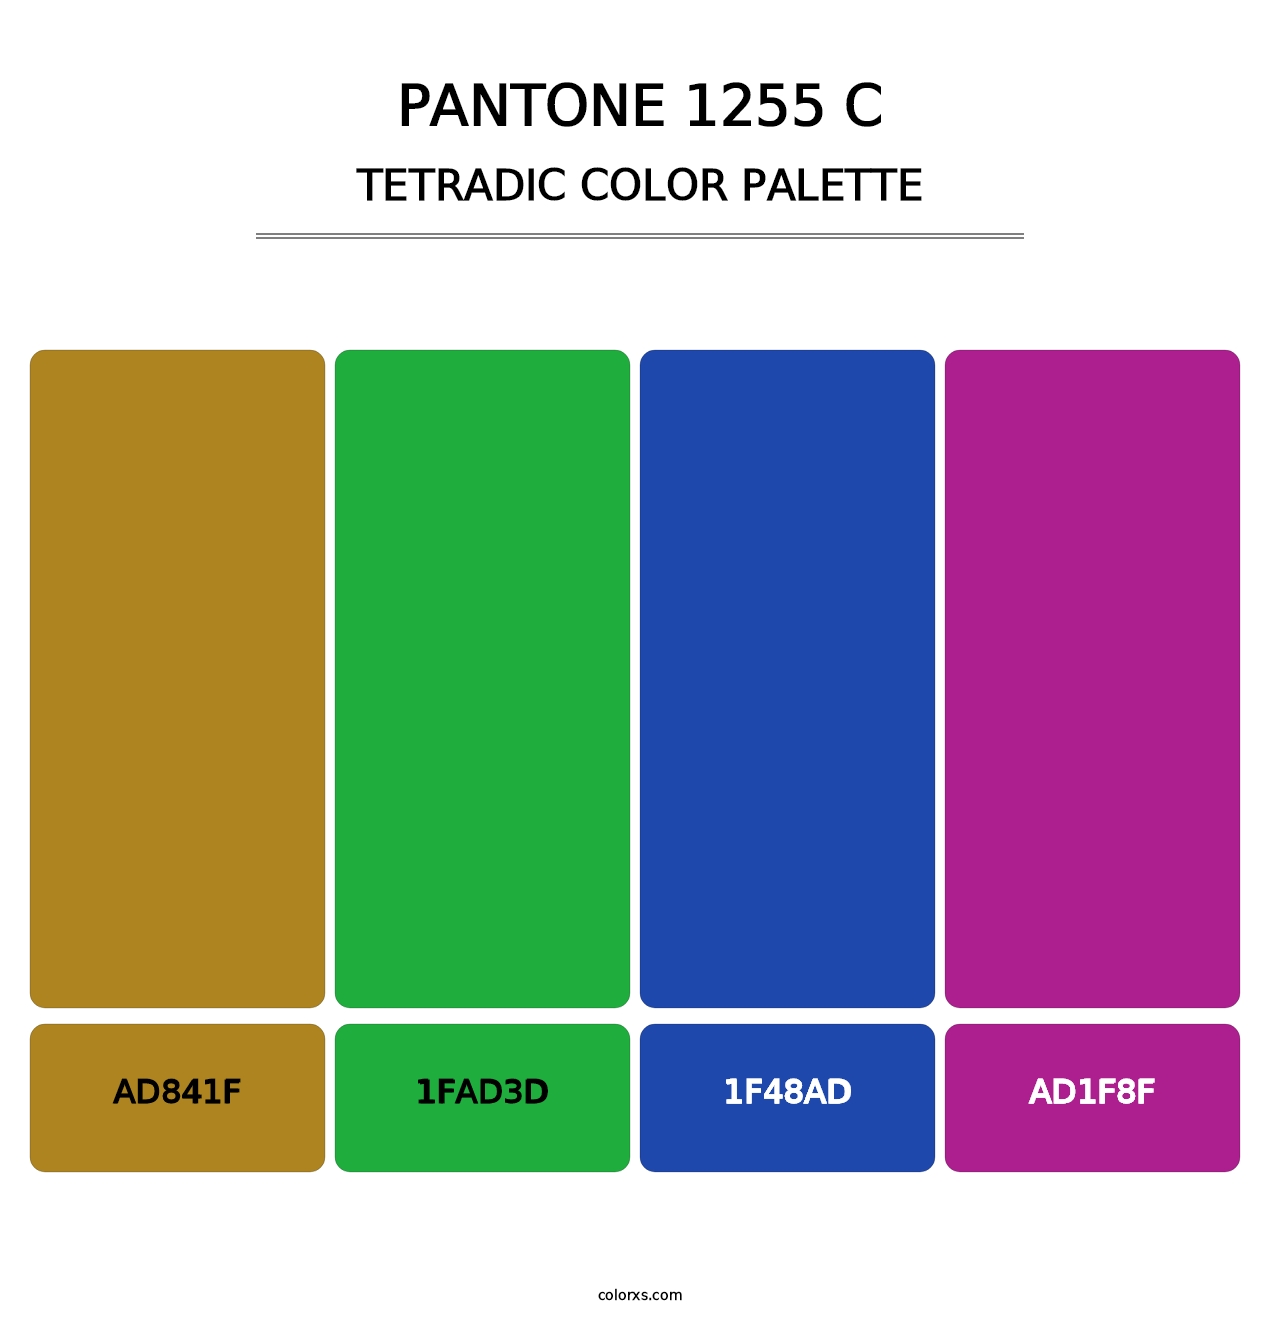 PANTONE 1255 C - Tetradic Color Palette